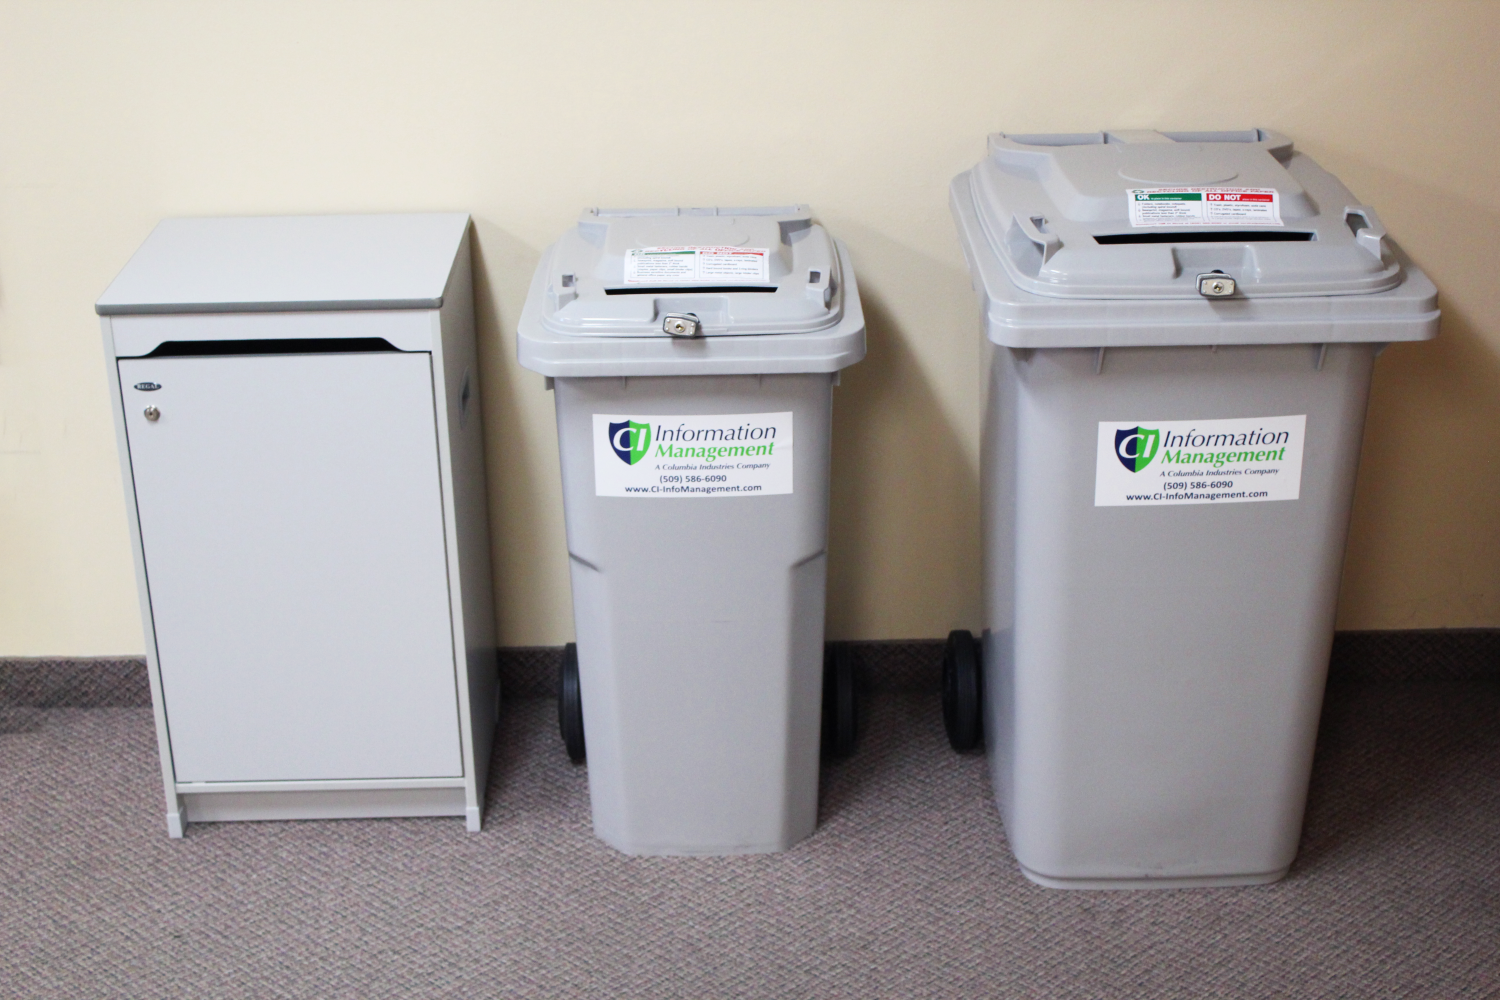 Shredding Collection Containers (from left to right): executive console, 32-gallon bin, 64-gallon bin